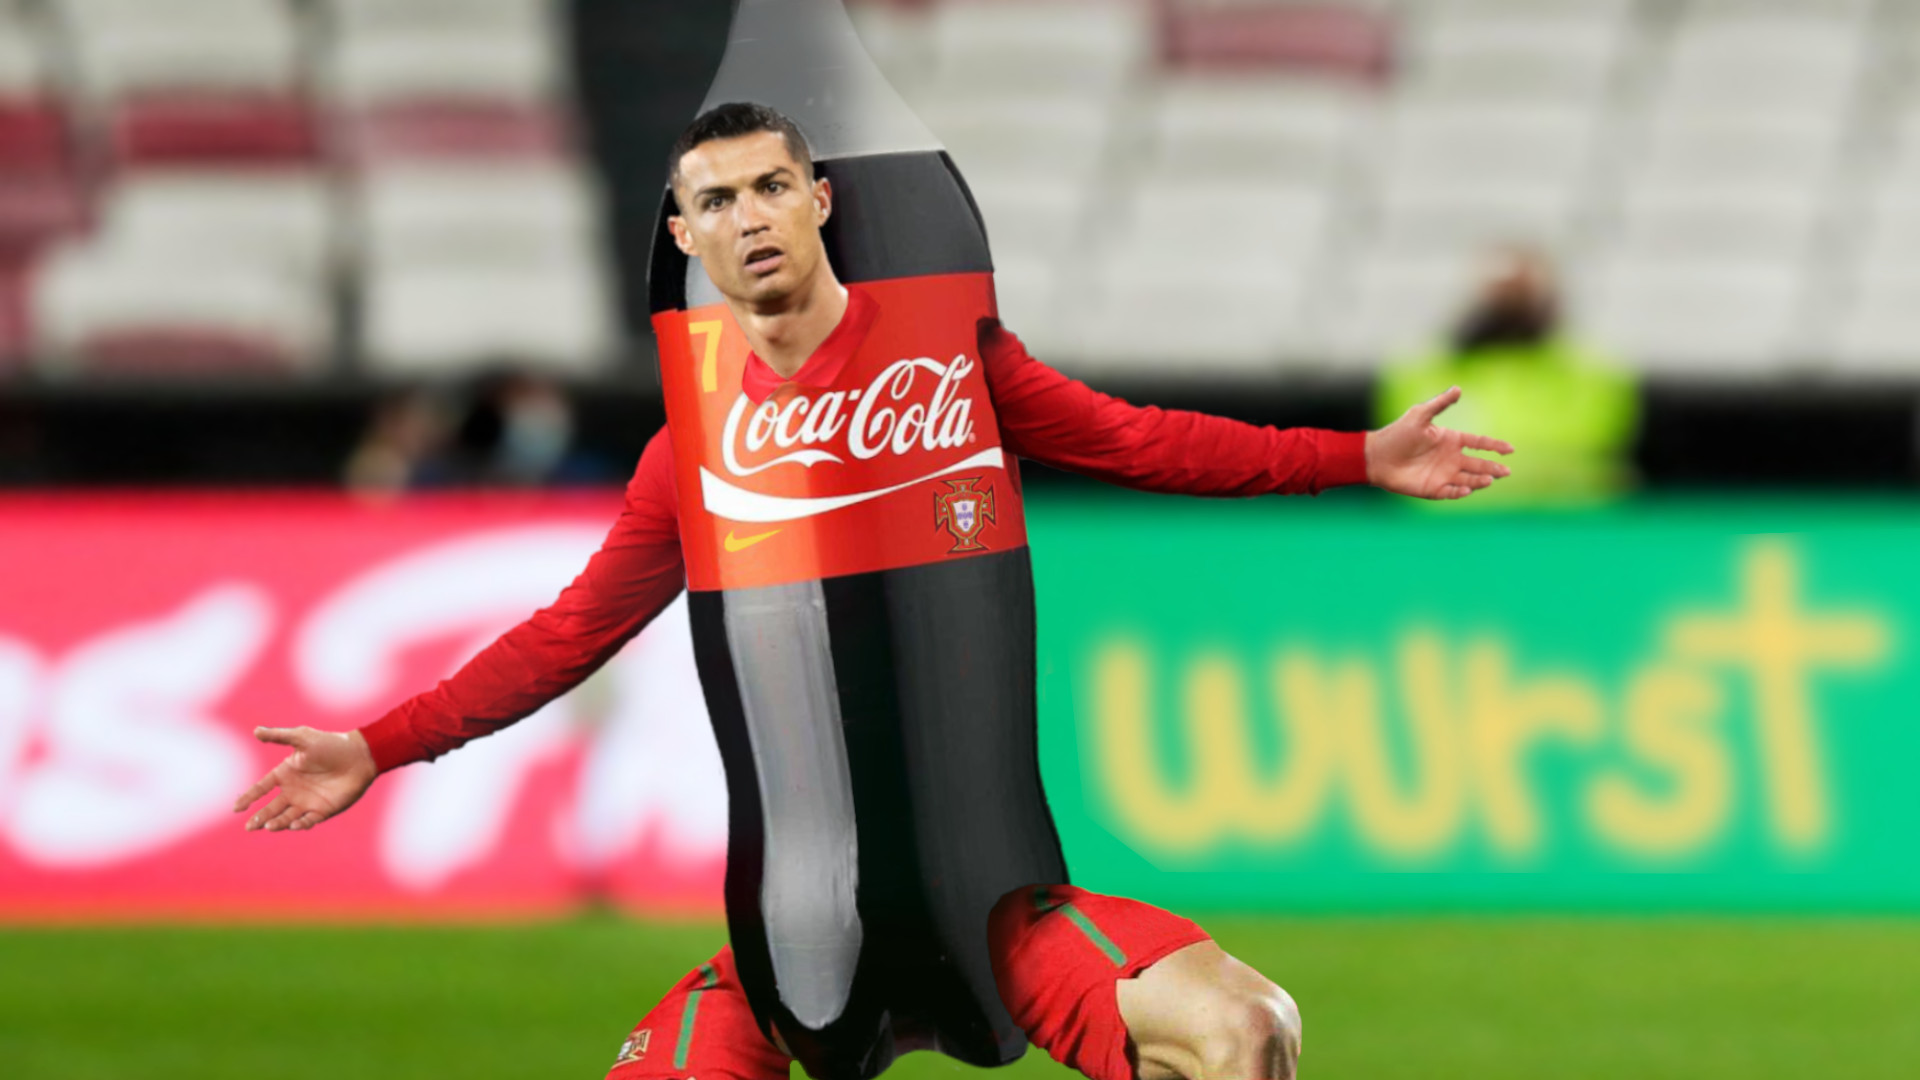 Ronaldo Coca-Cola costume